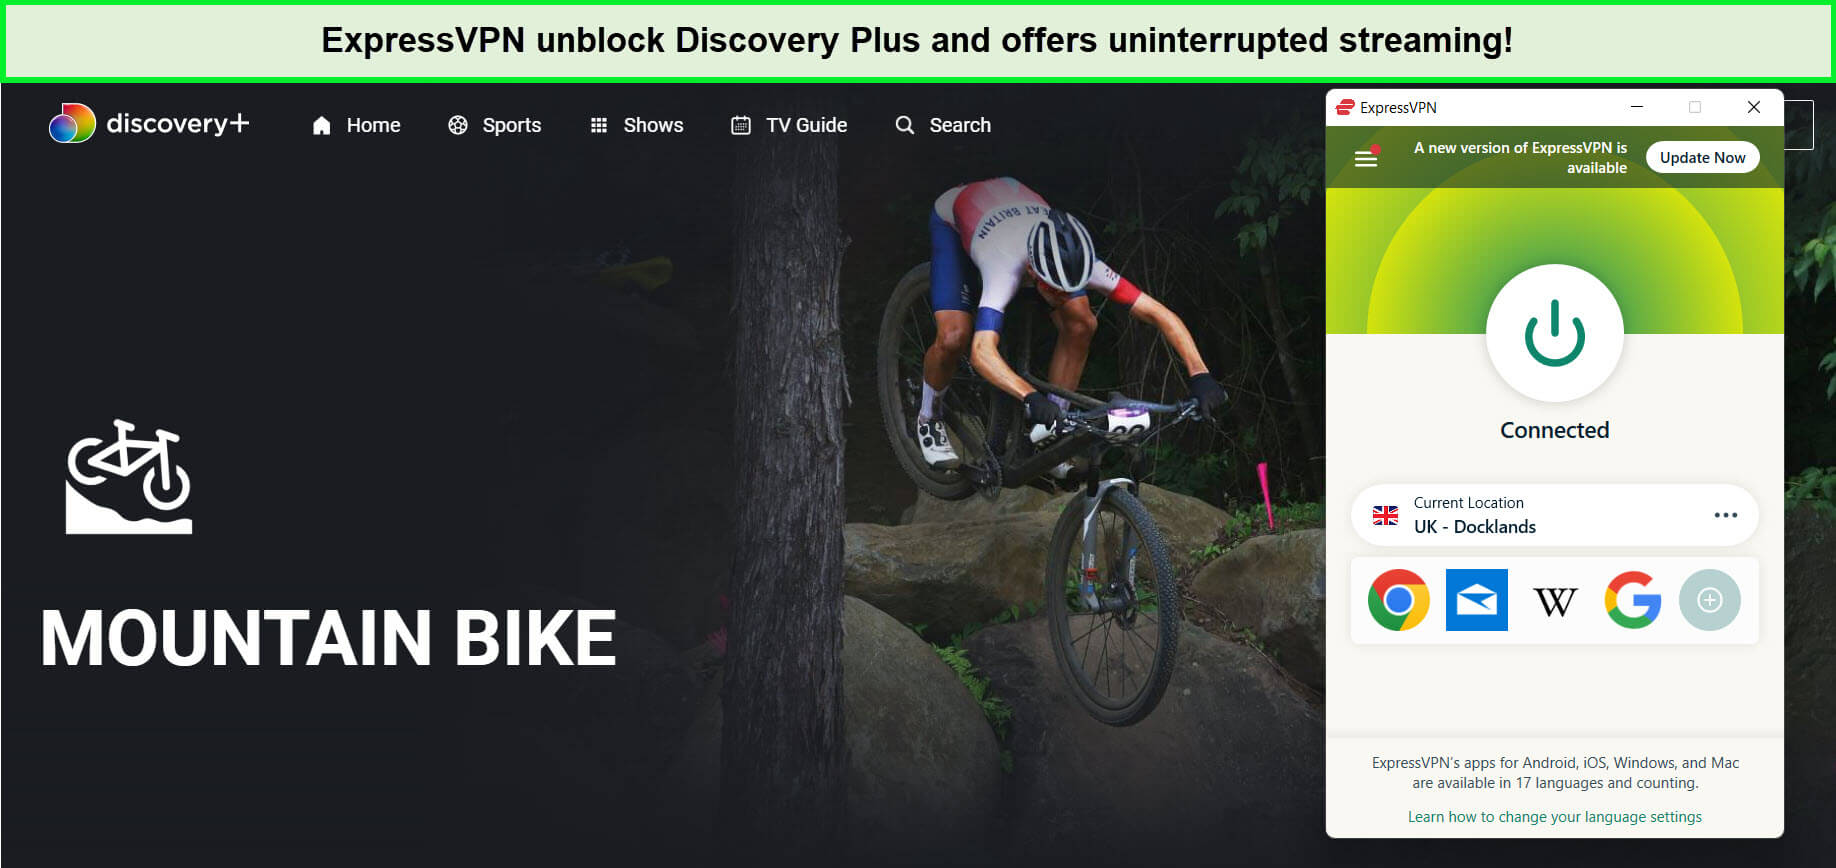 expressvpn-unblocks-uci-mountain-bike-world-series-in-USA-discovery-plus